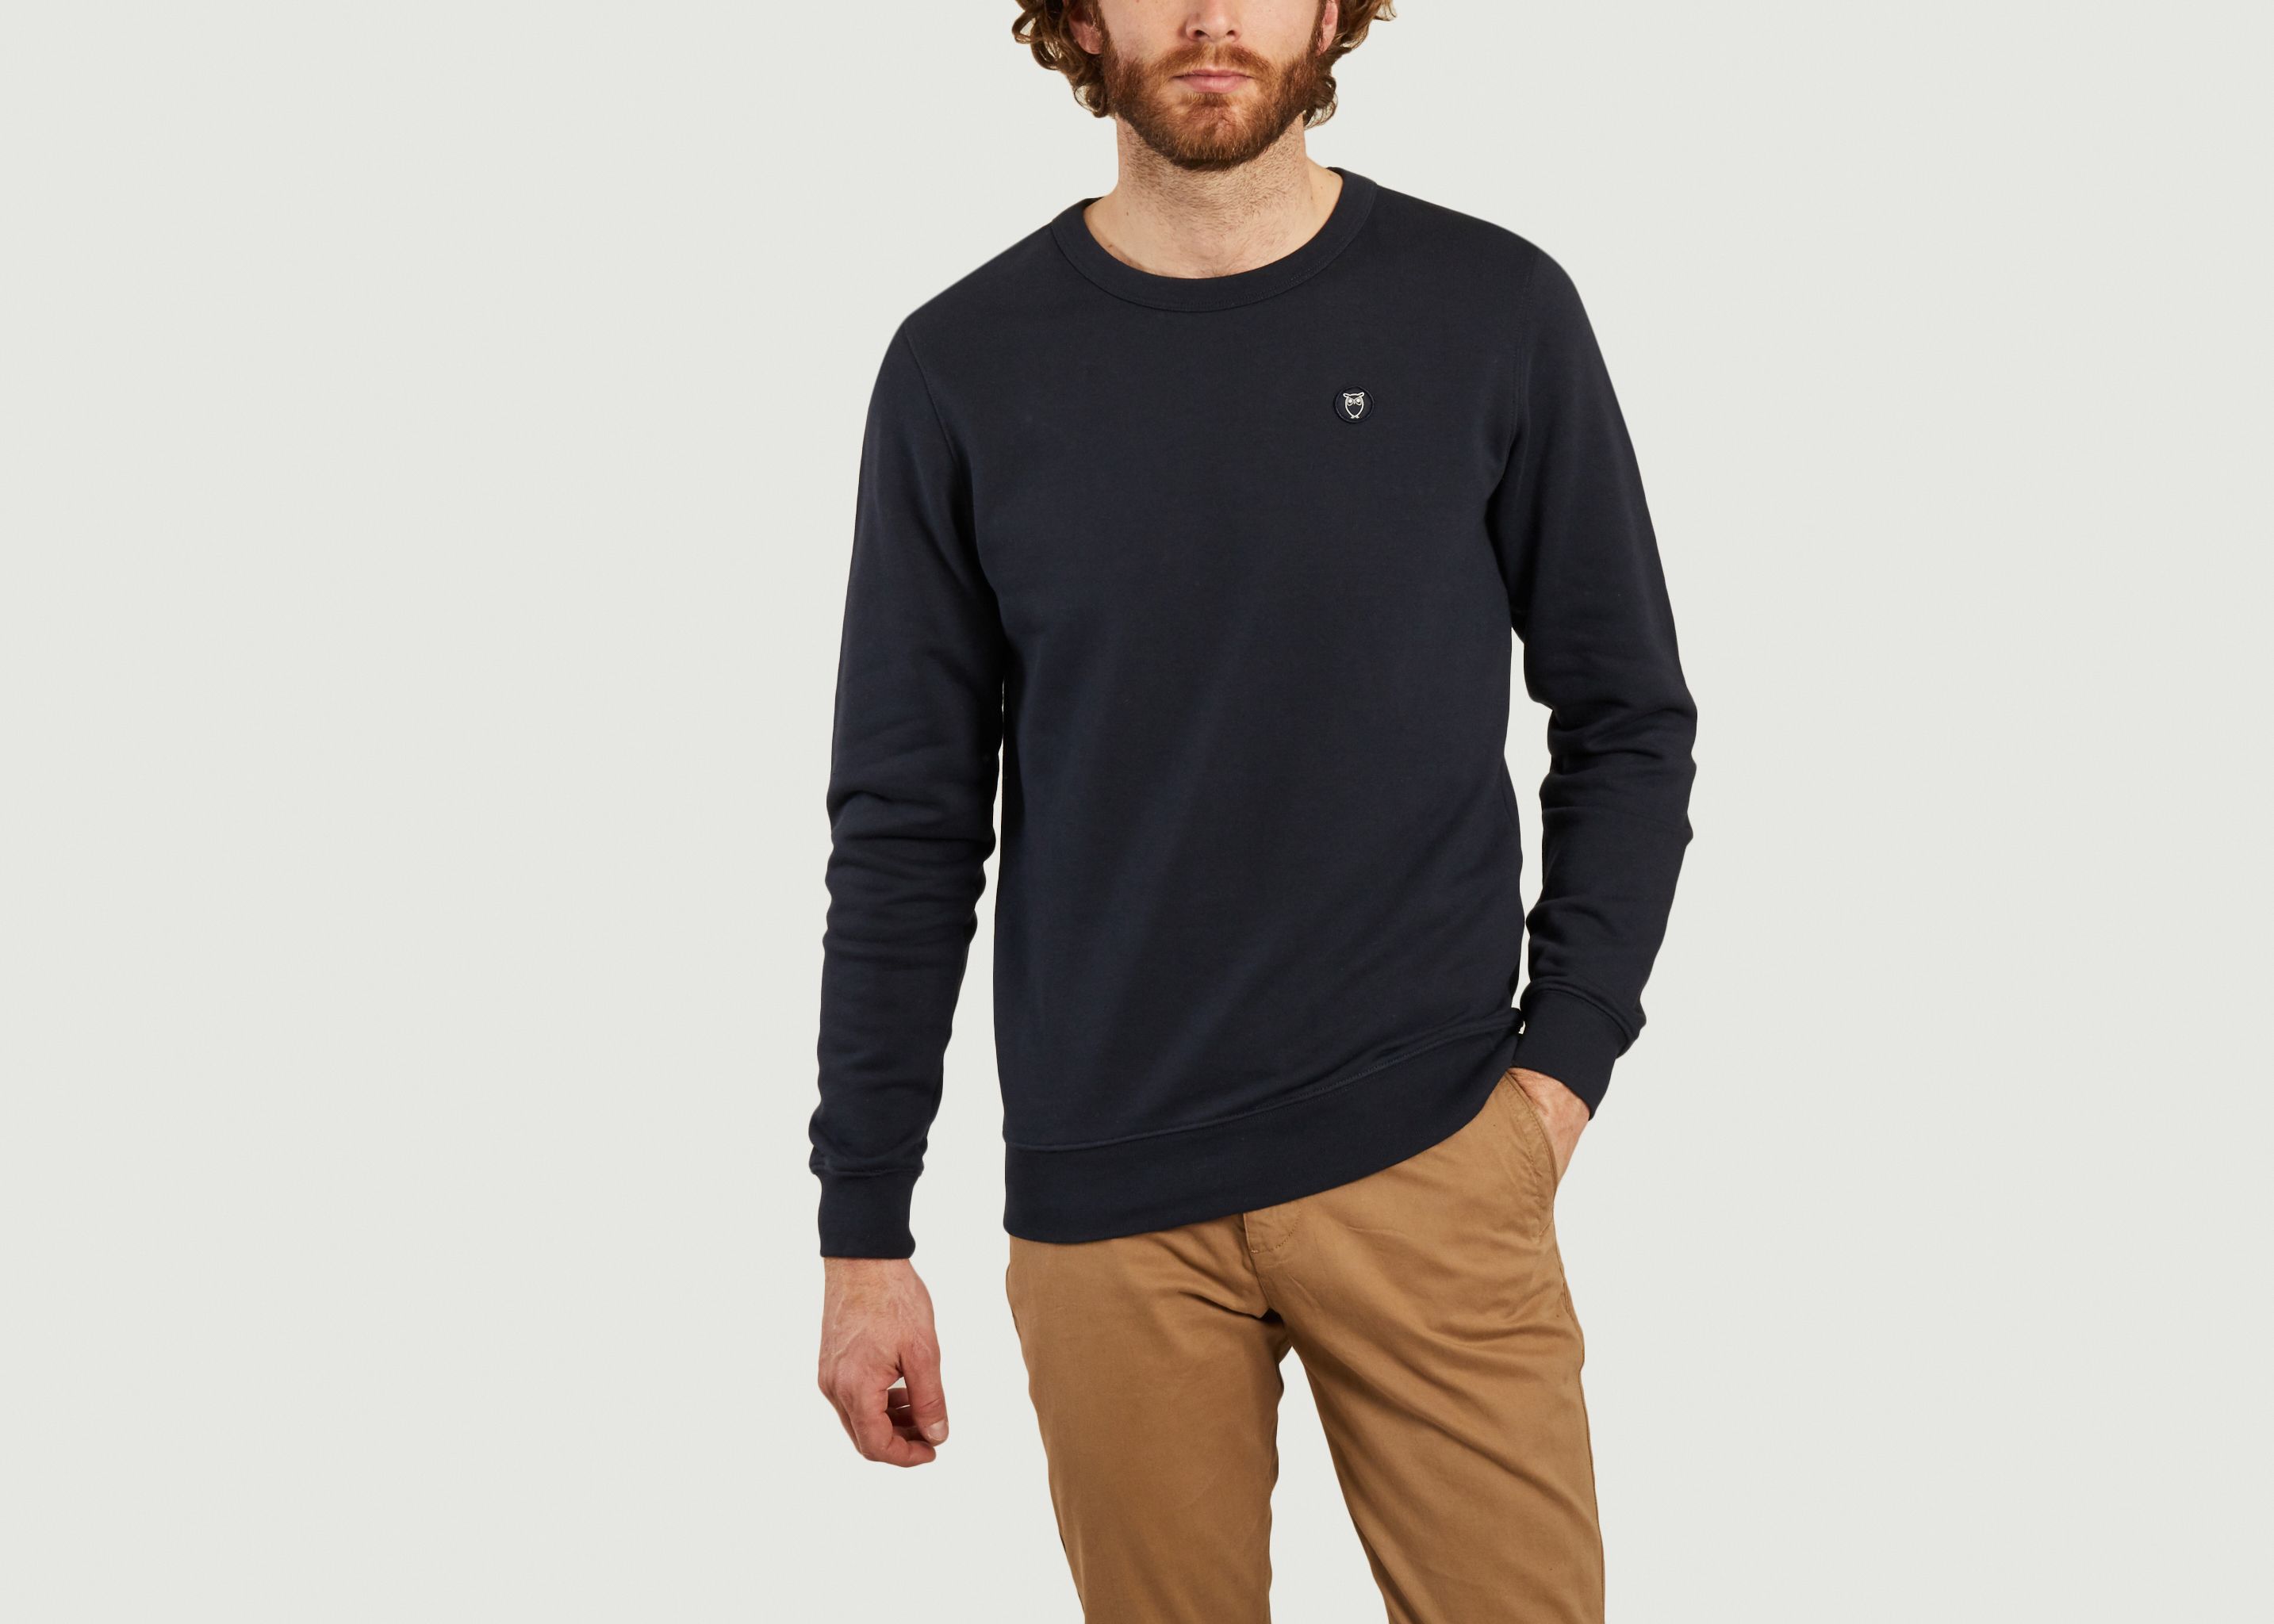 ELM Basic sweatshirt - KCA